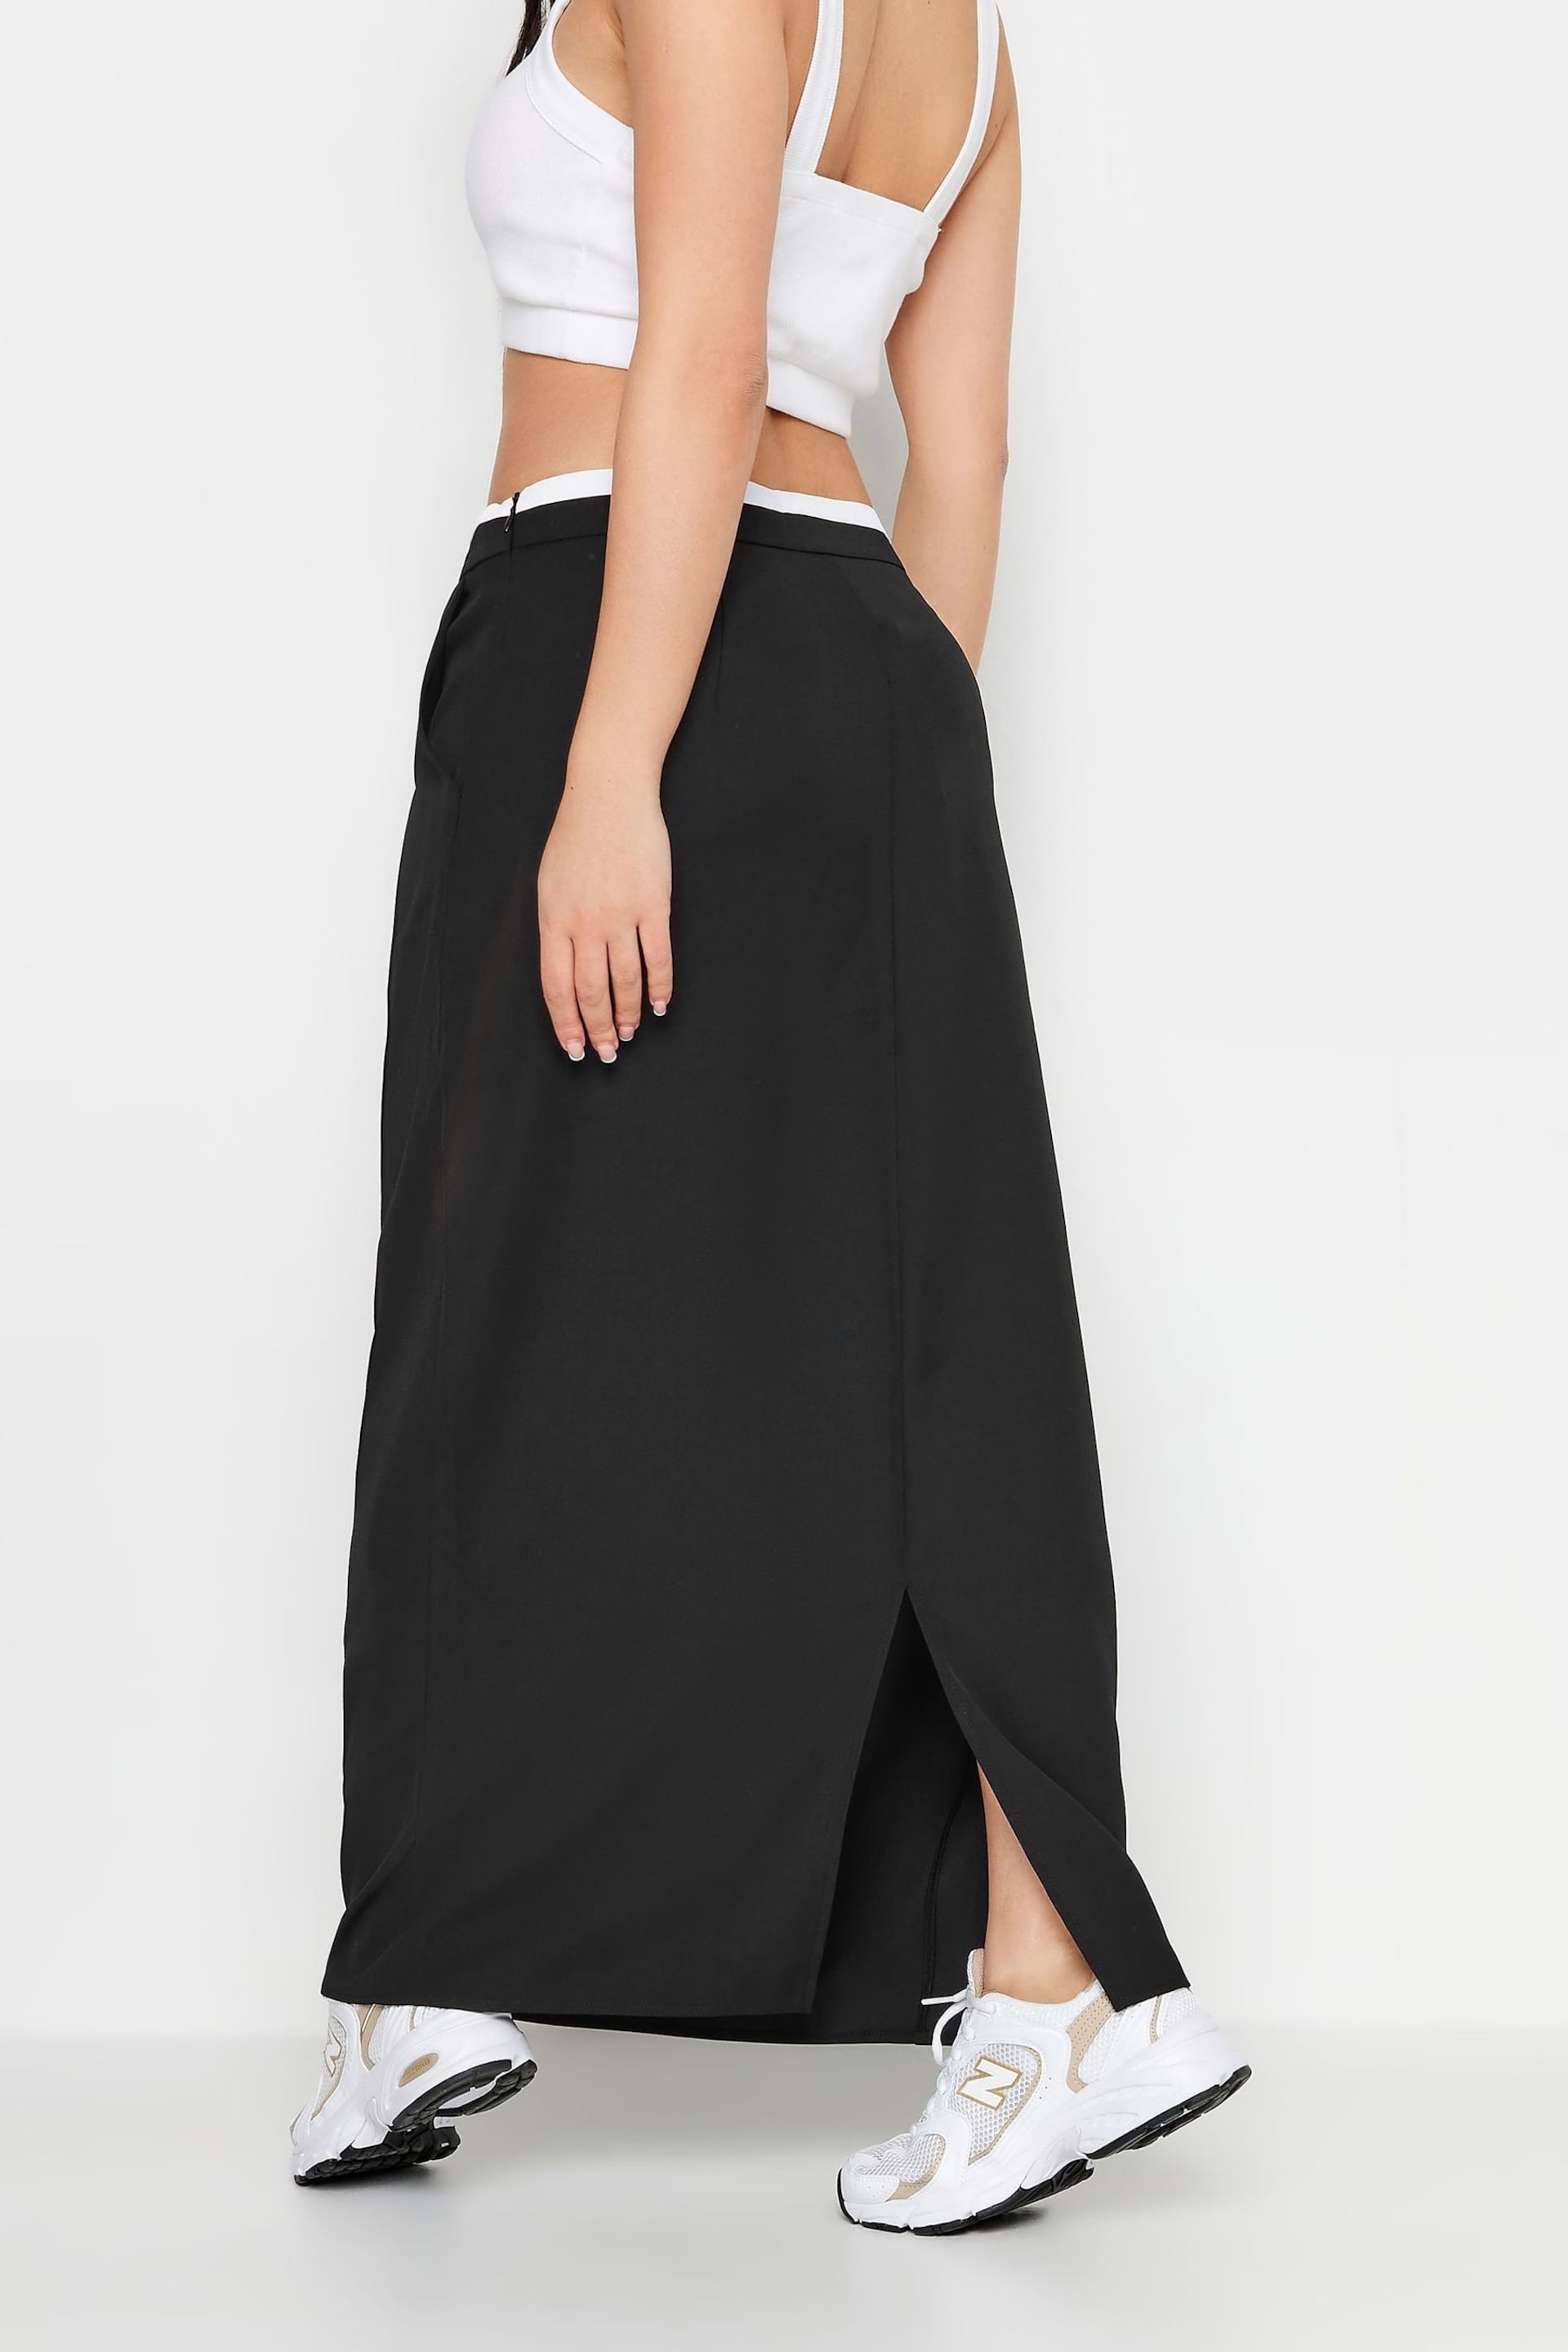 PixieGirl Petite Black Contrast Waist Skirt - Image 3 of 3